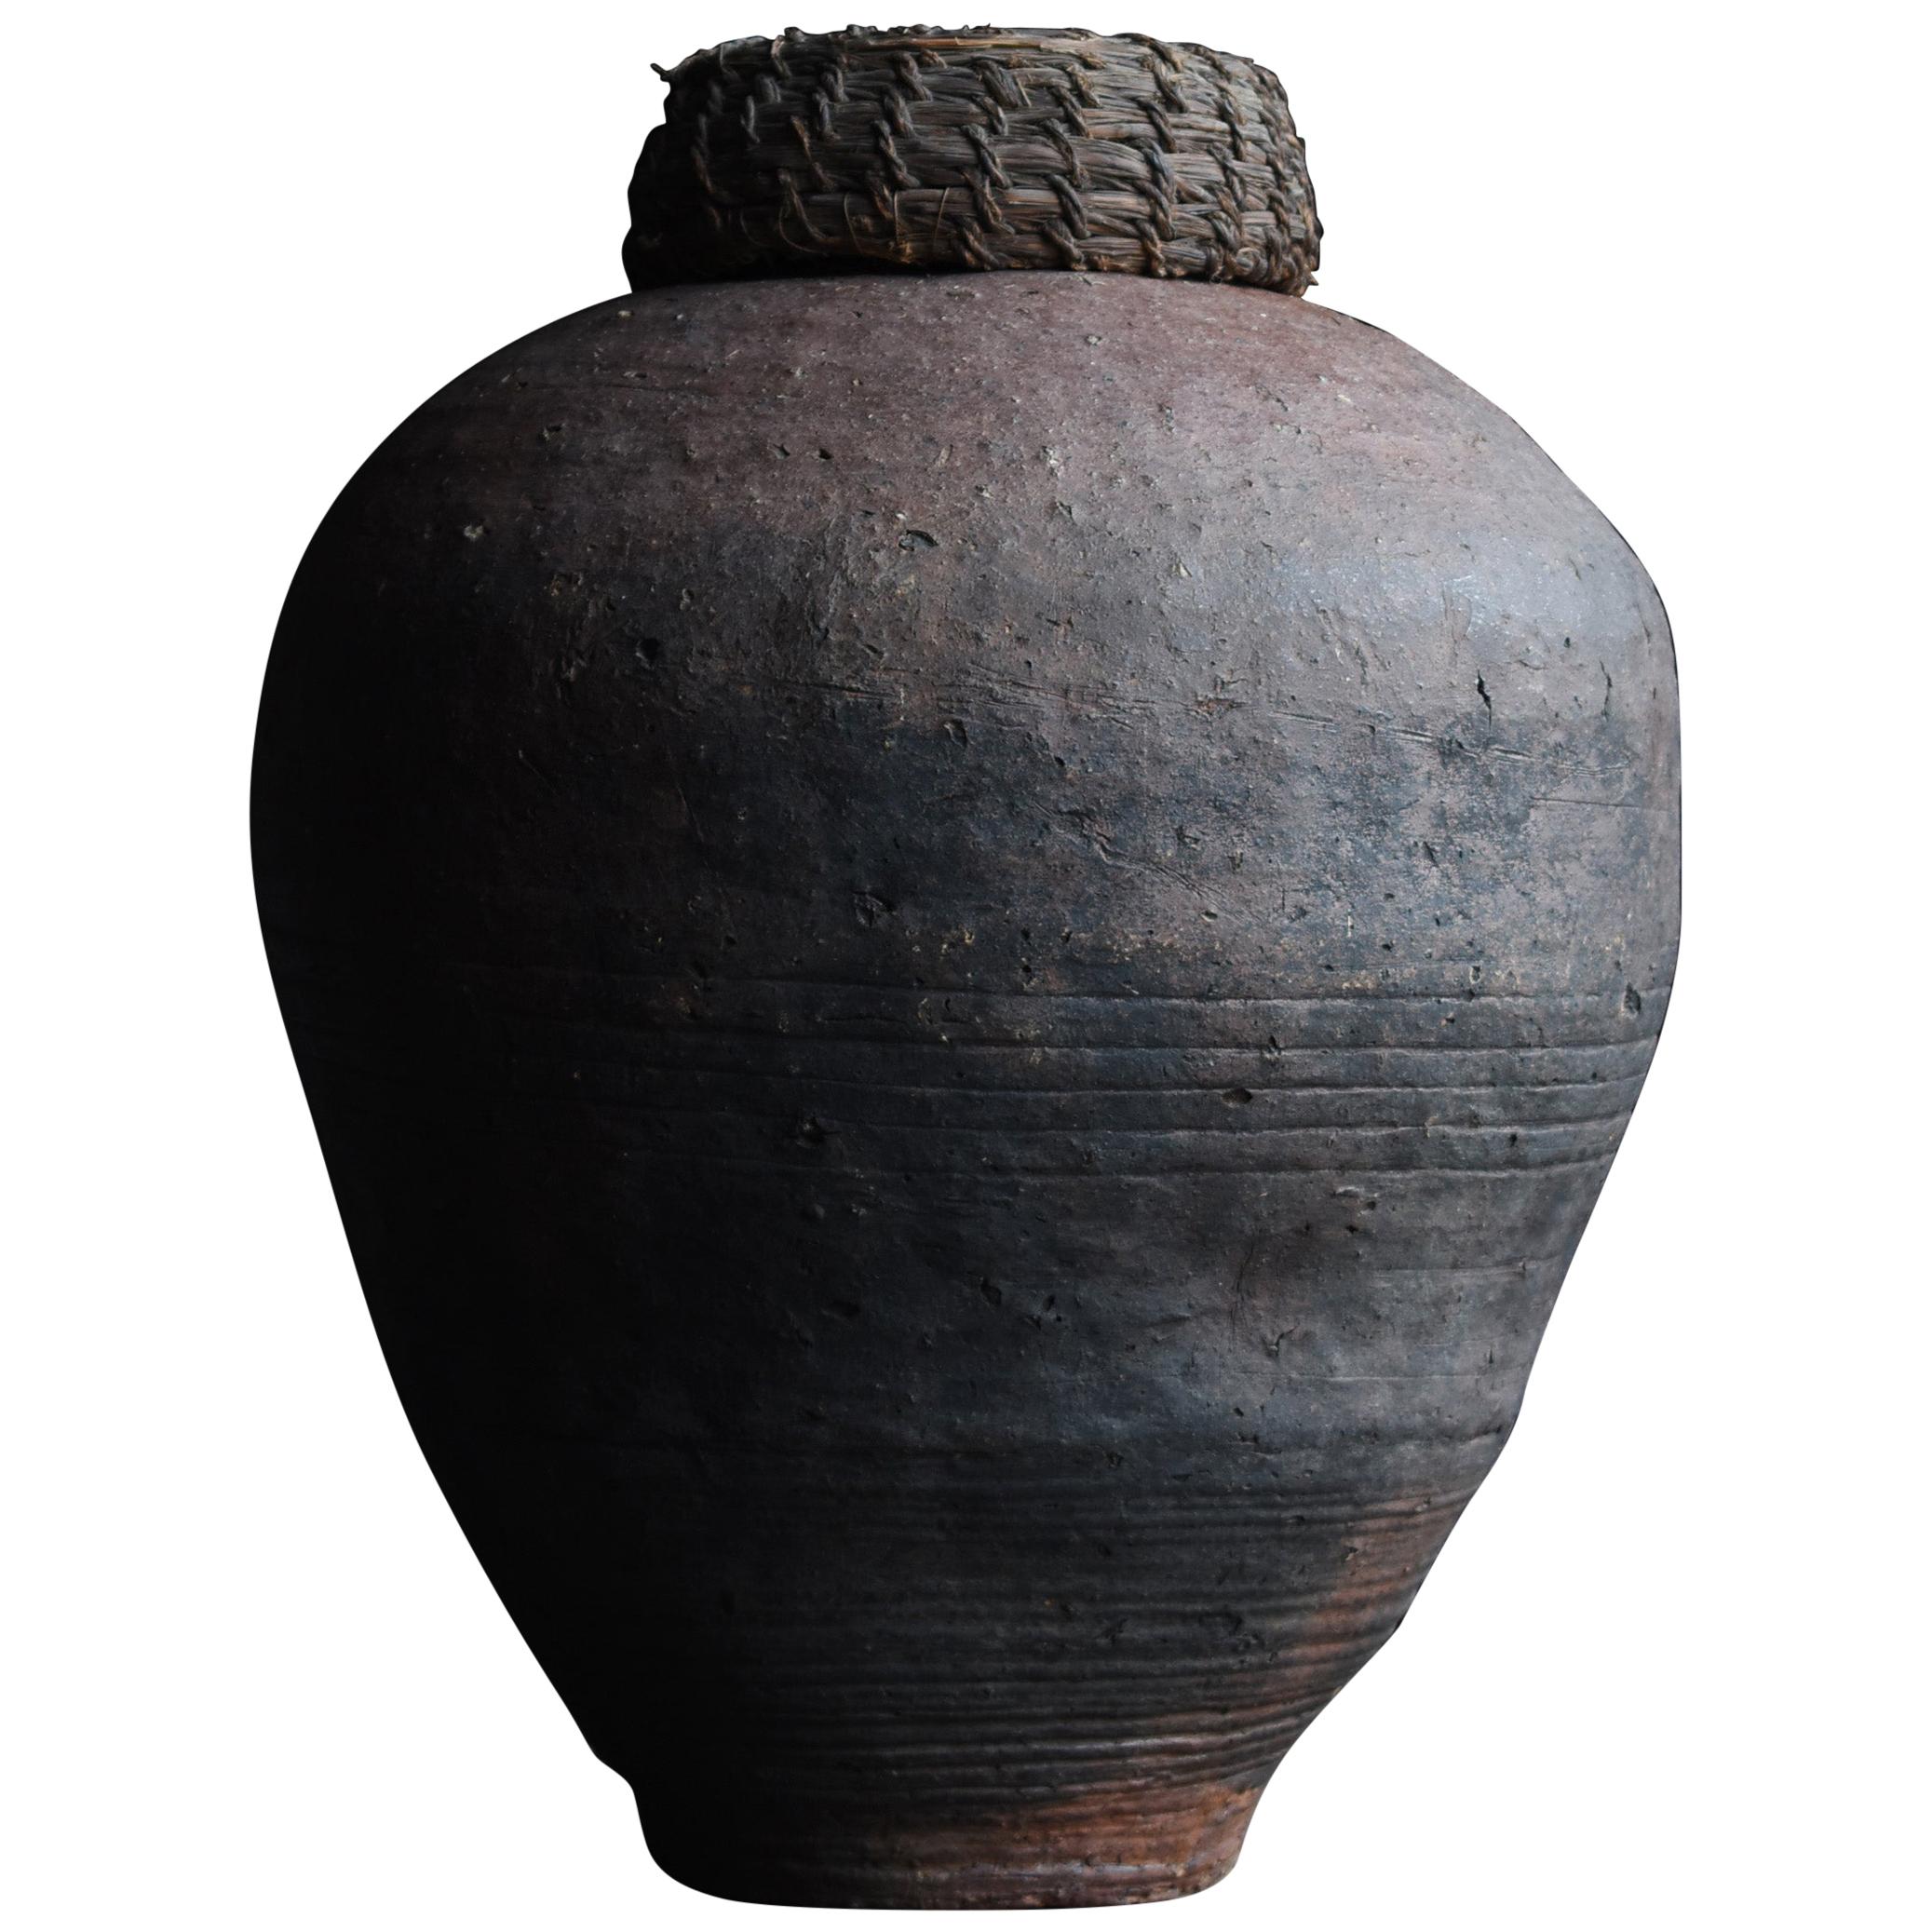 Edo Period 1700-1860 Japanese Tsubo Shigaraki Pottery Vase Pot Jar Ceramic